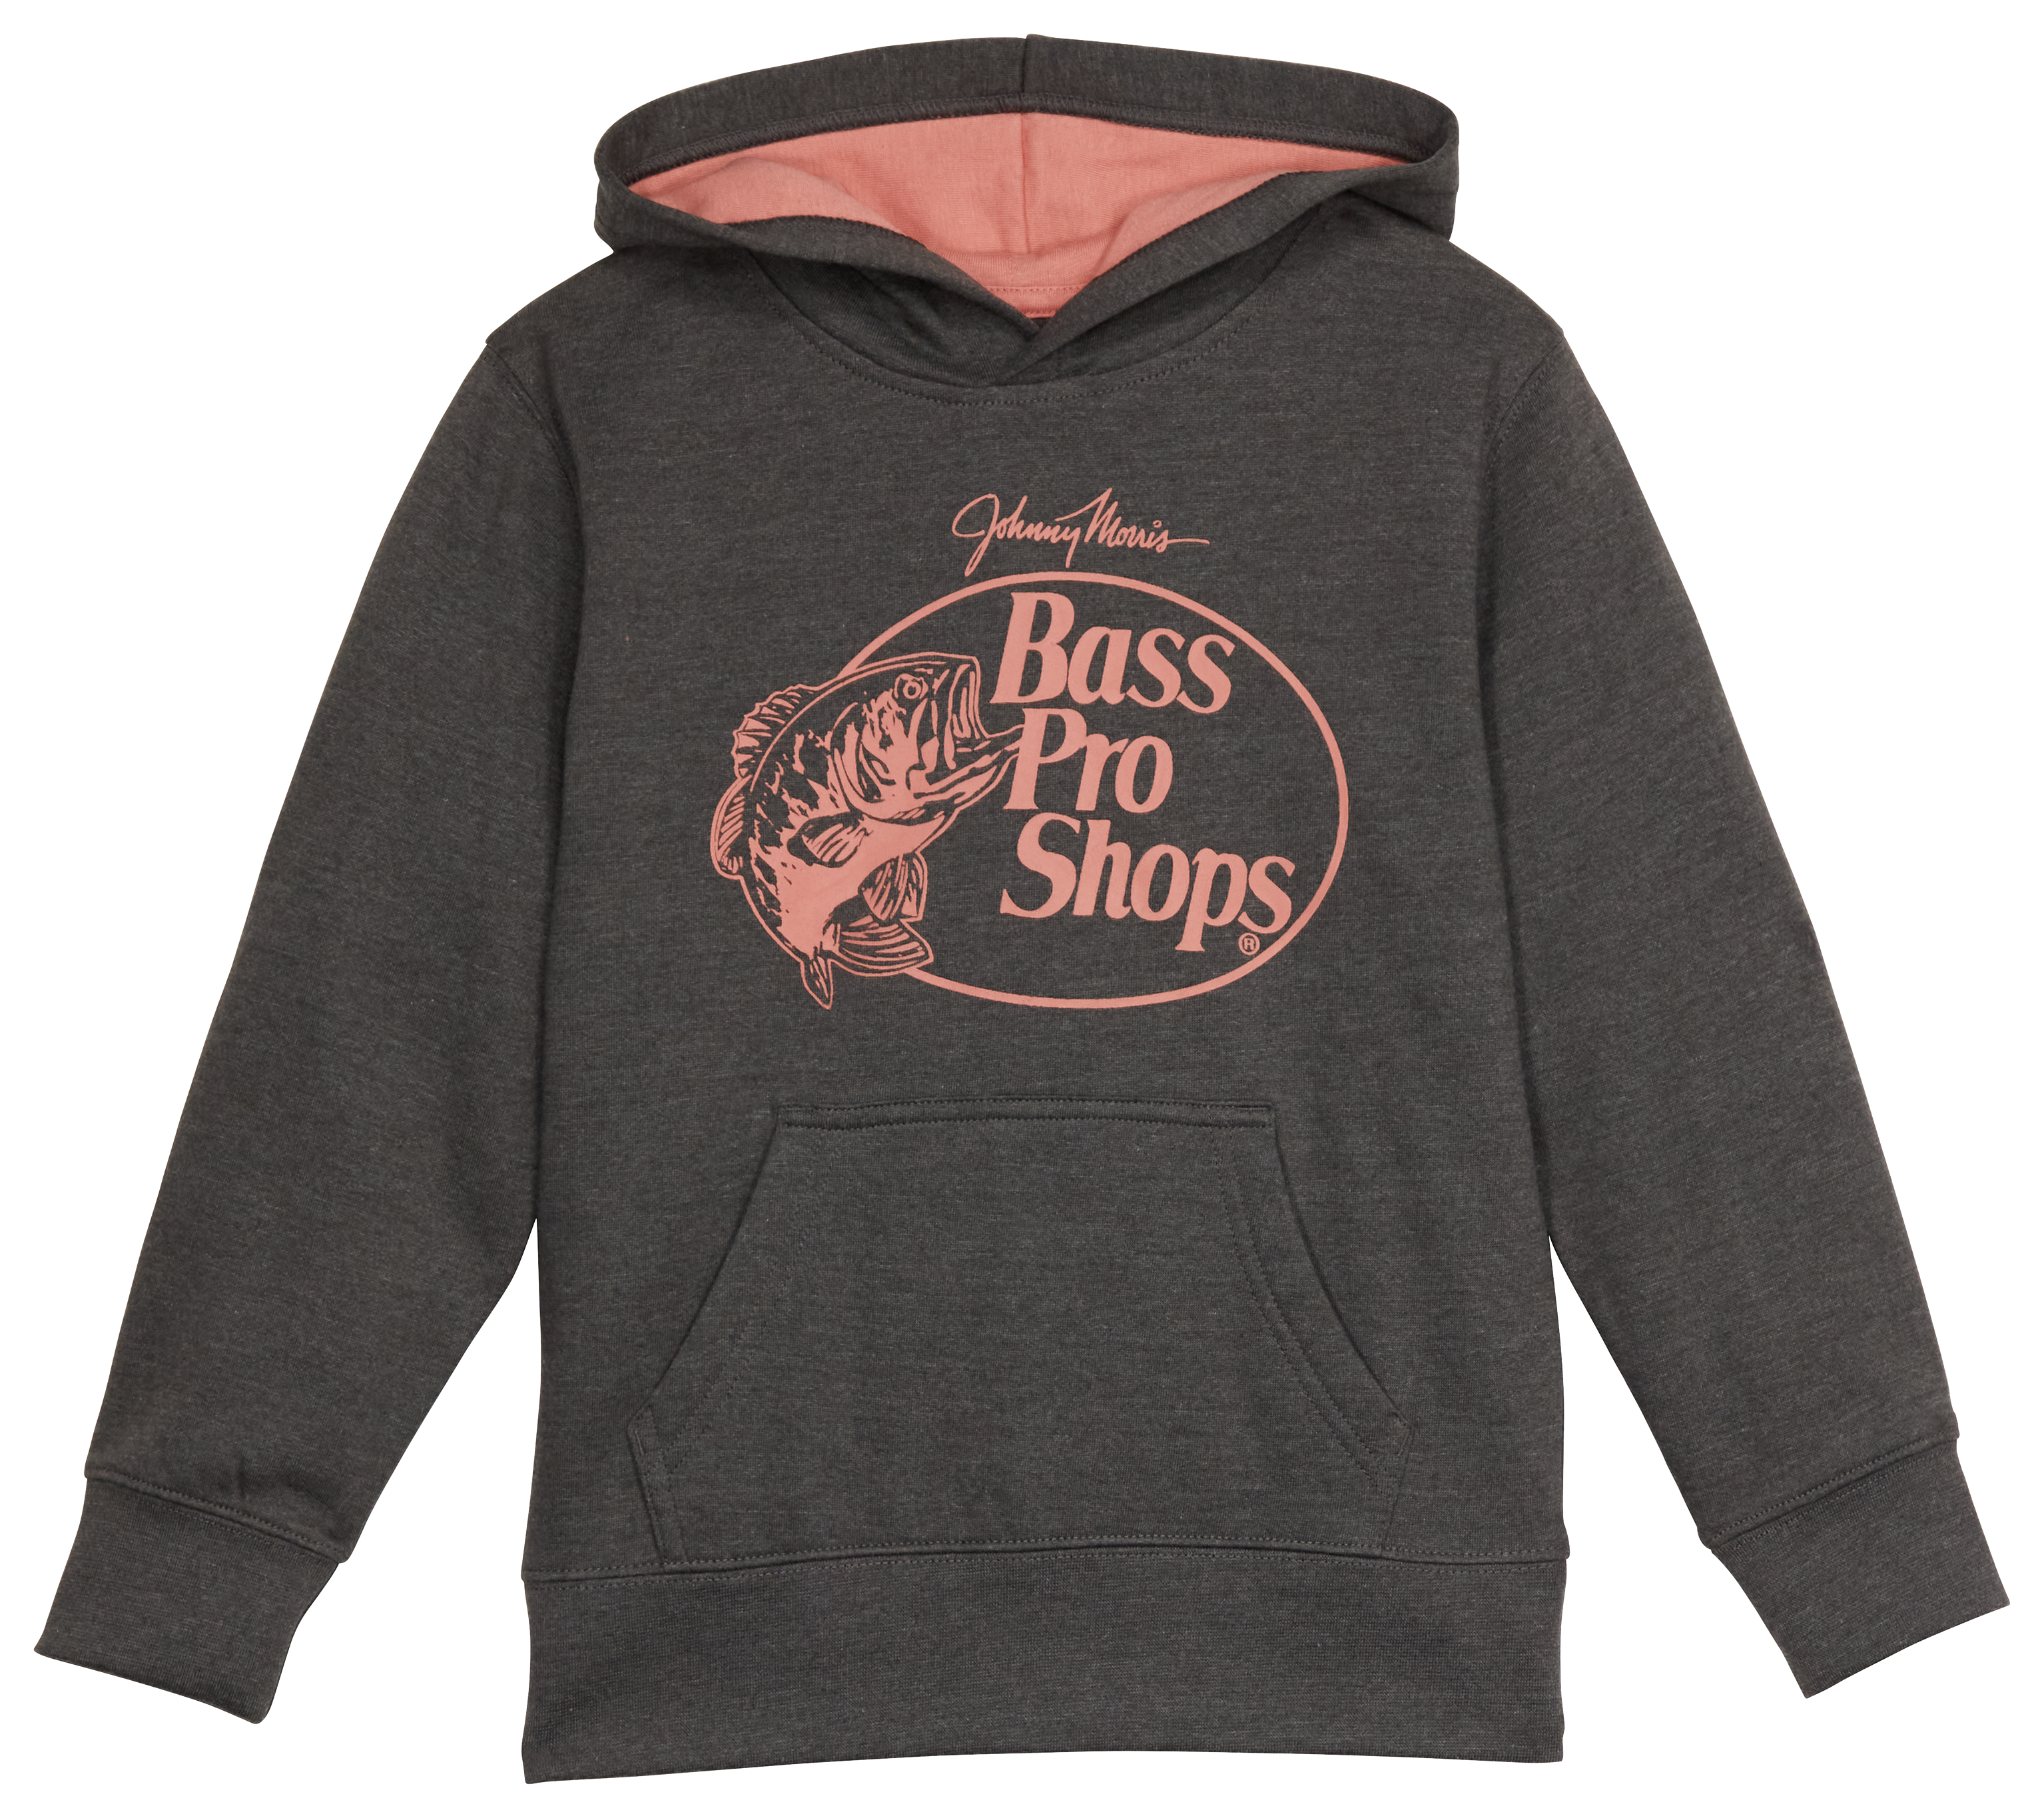 Bass Pro Shops Original Logo Long-Sleeve Hoodie for Kids - India Ink - L